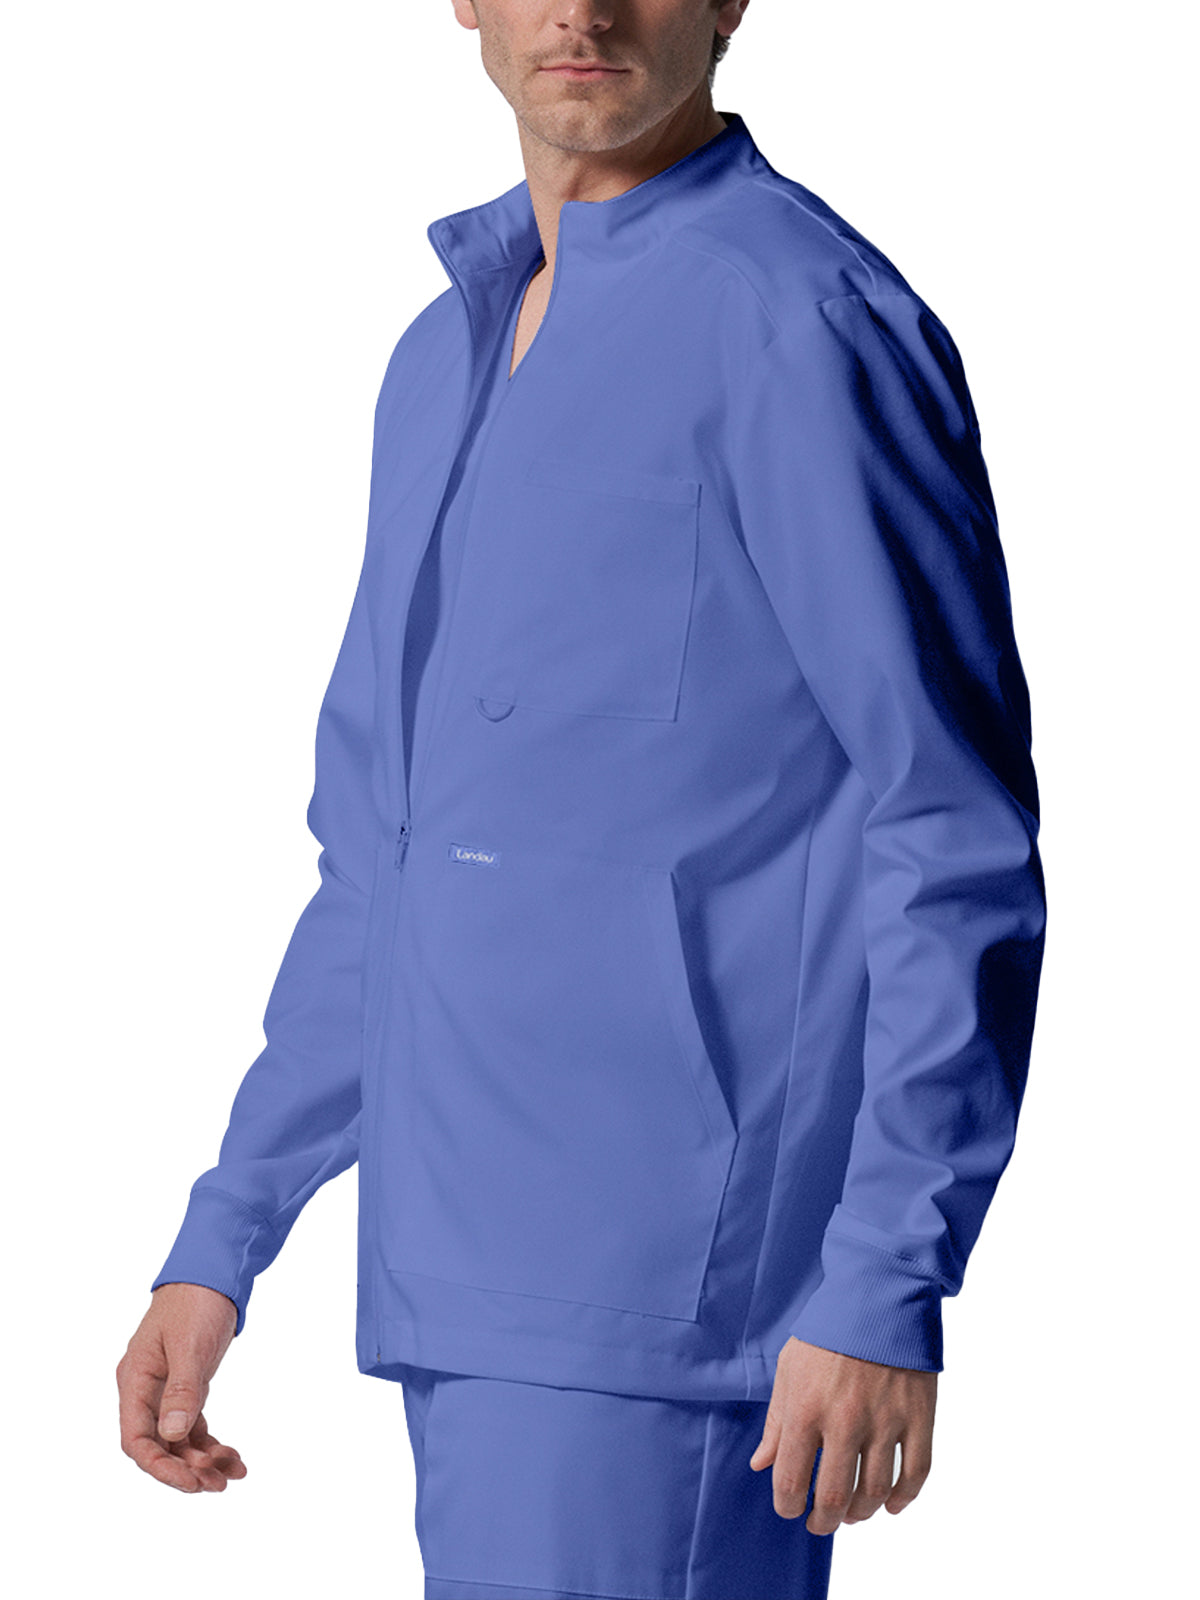 Men's Warm-Up Scrub Jacket